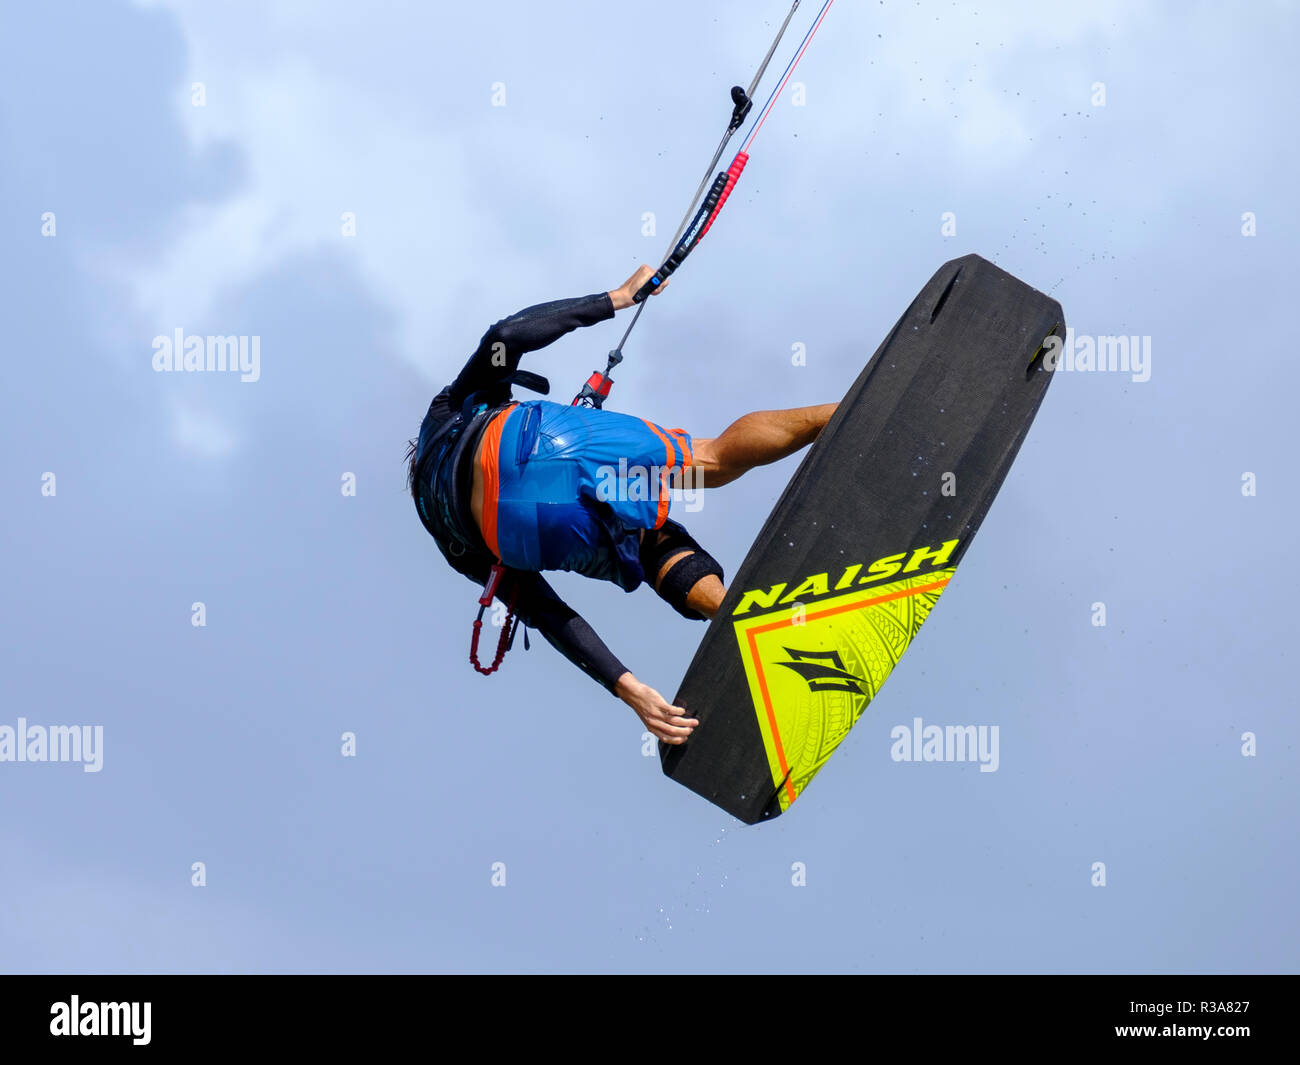 Kitesurfers at Caloundra Stock Photo